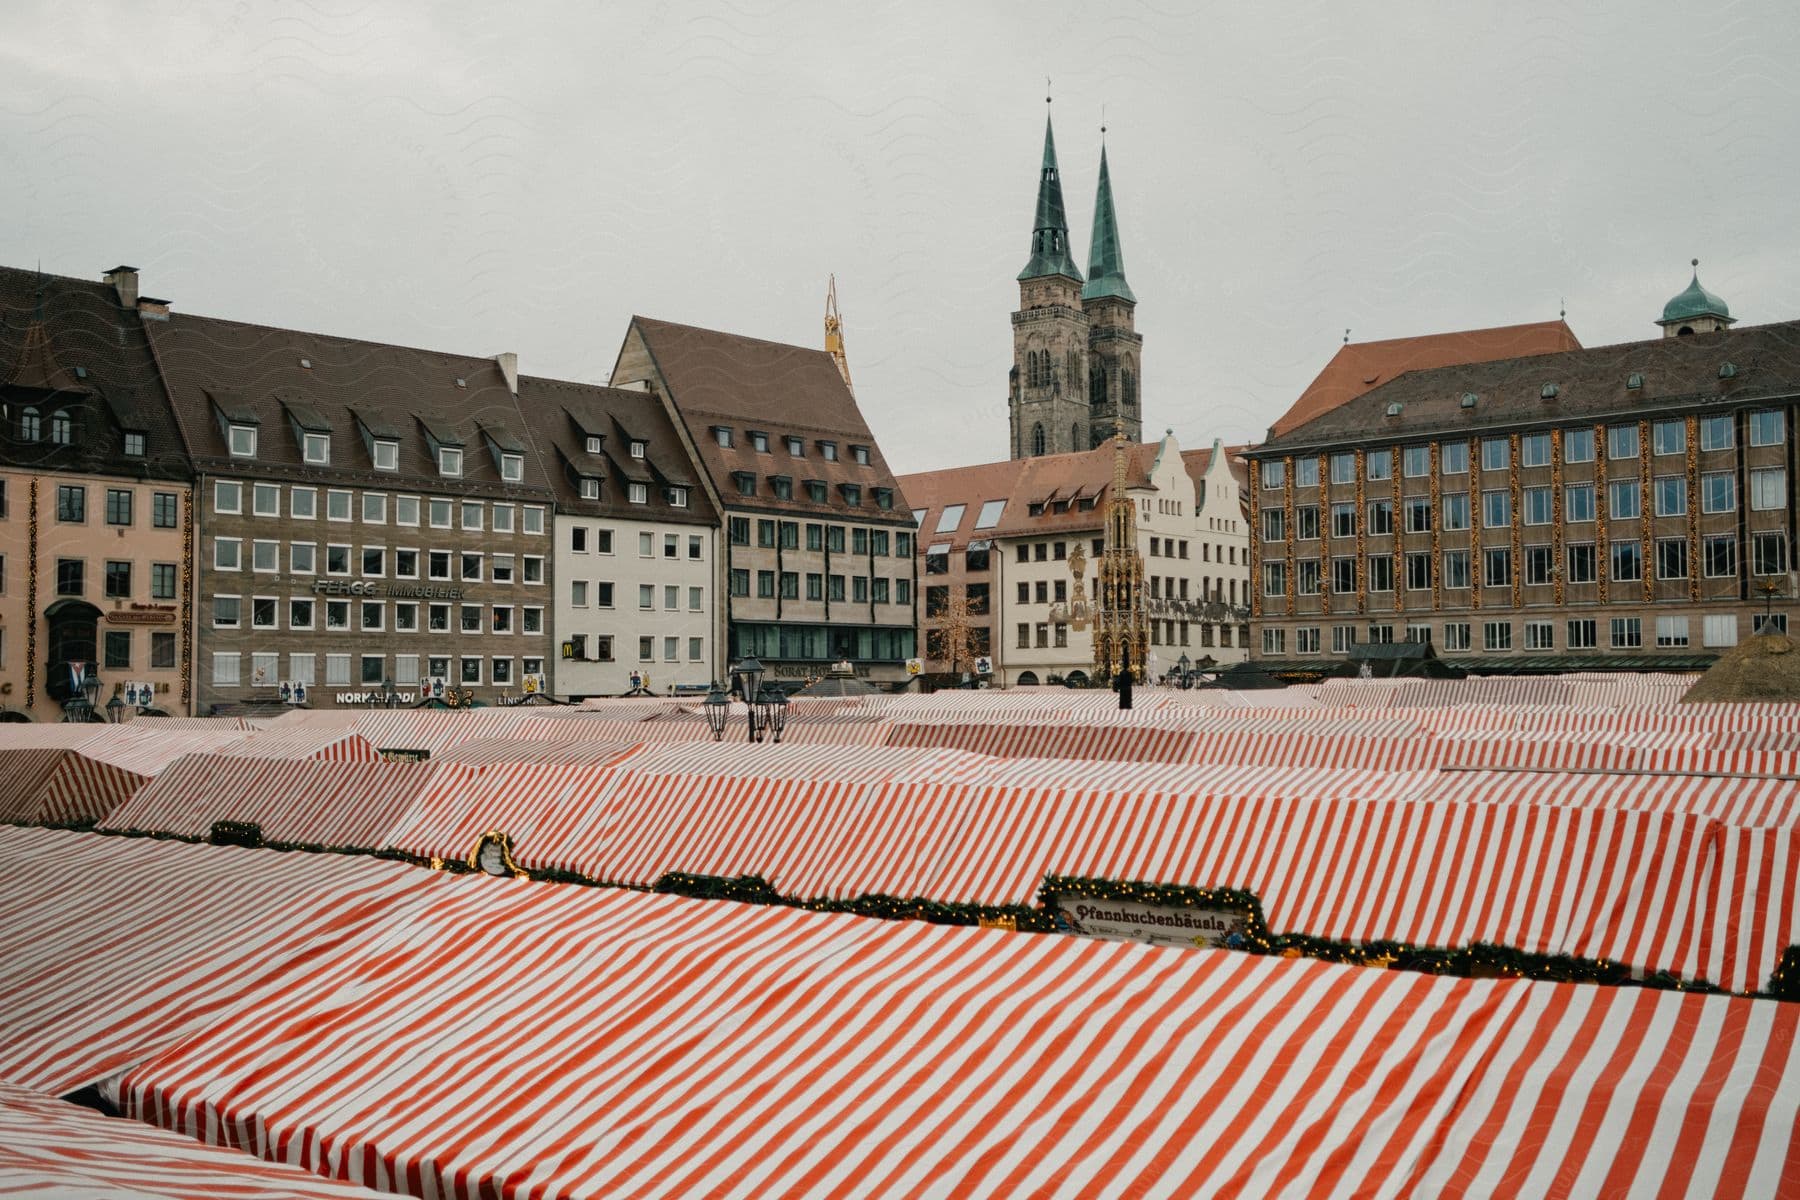 Nuremberg Christmas Market.